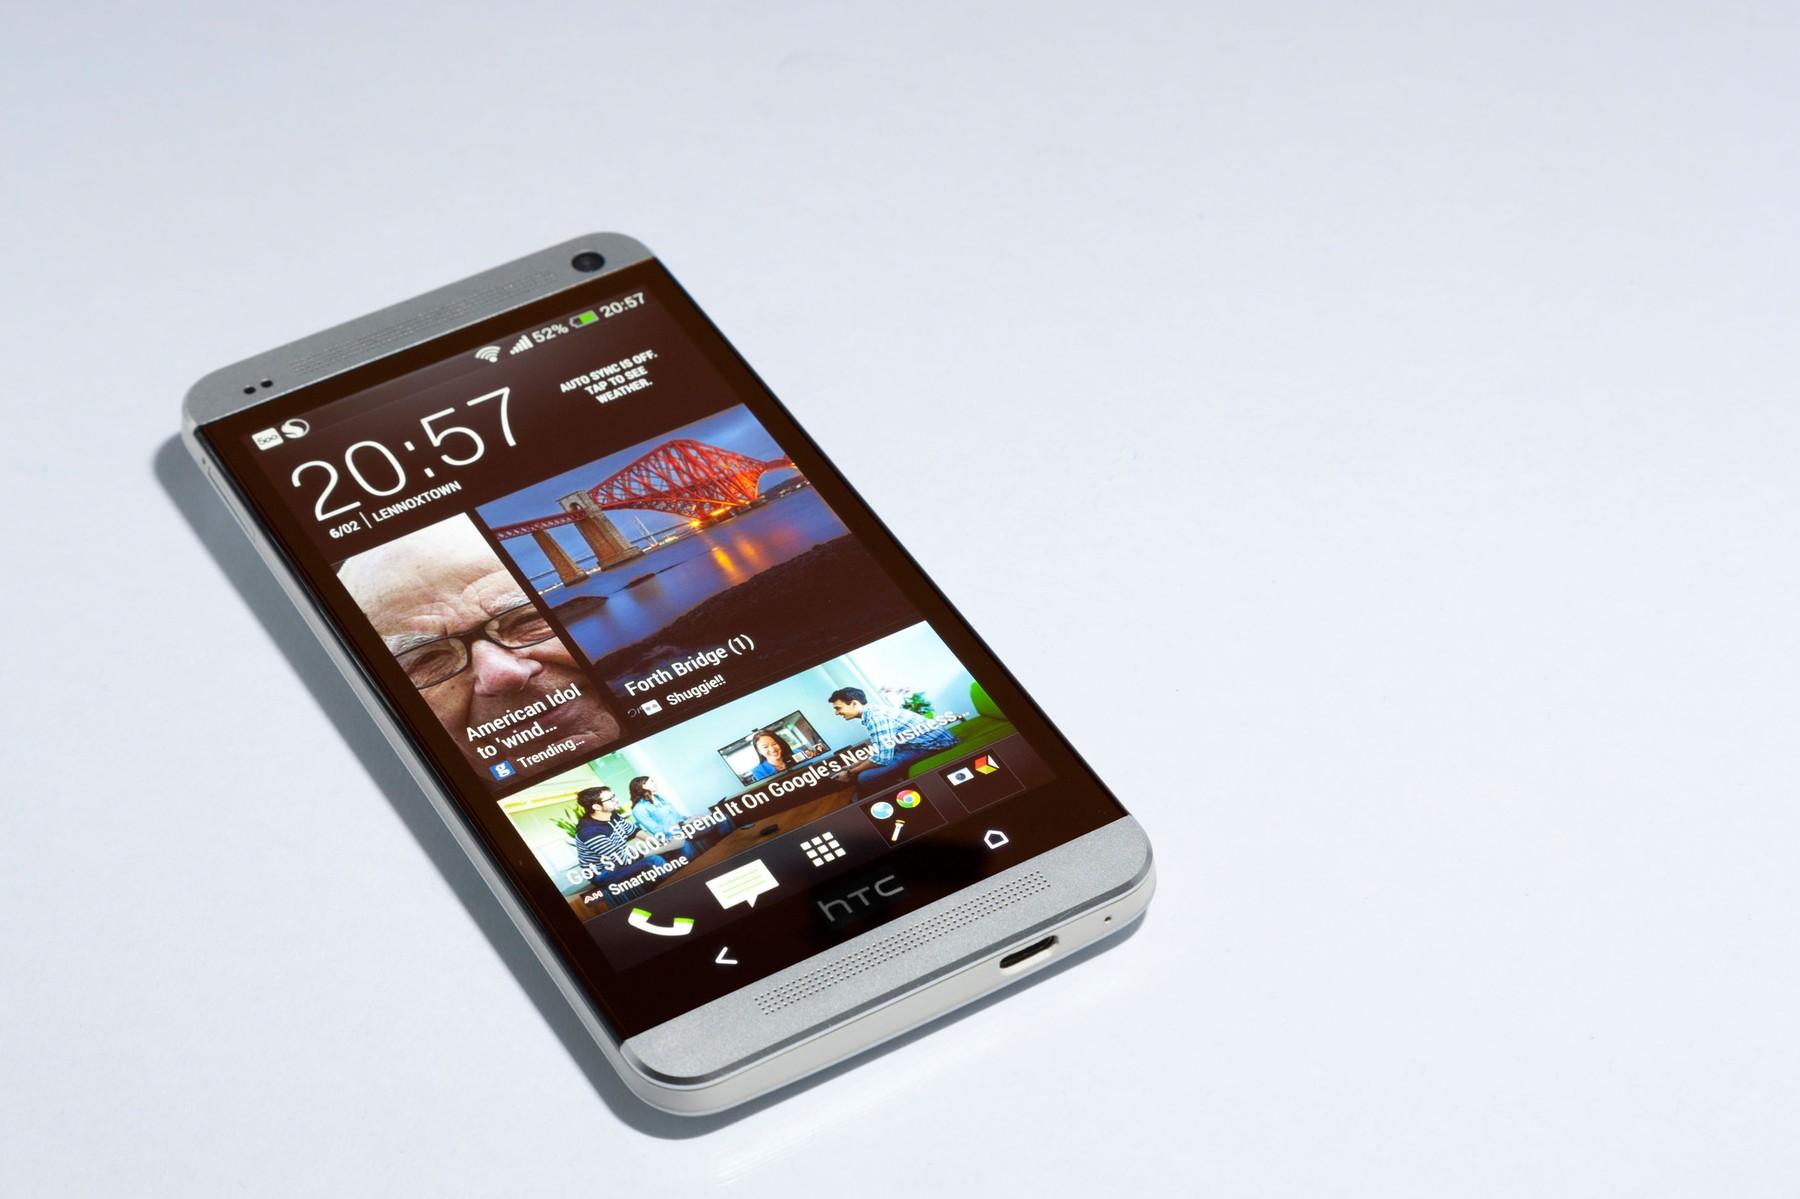 HTC mobilni telefon, kako vratiti izbrisane fotografije, mobilni telefoni, saveti za Android, Dr Fone